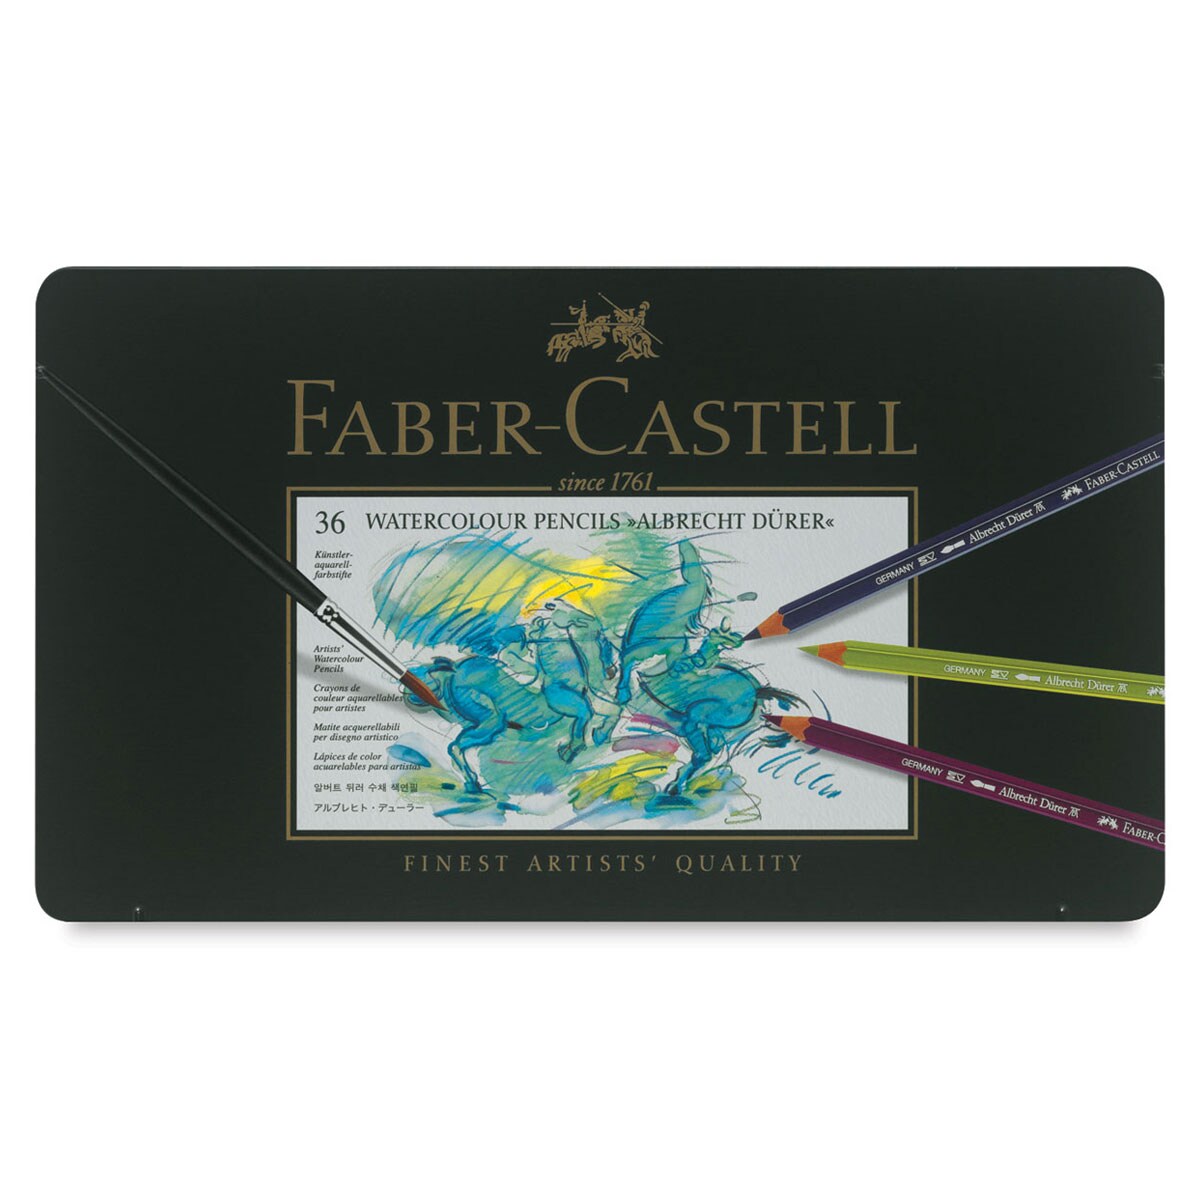 Faber-Castell Albrecht Durer Watercolor Pencils- Assorted Colors, Set of 36